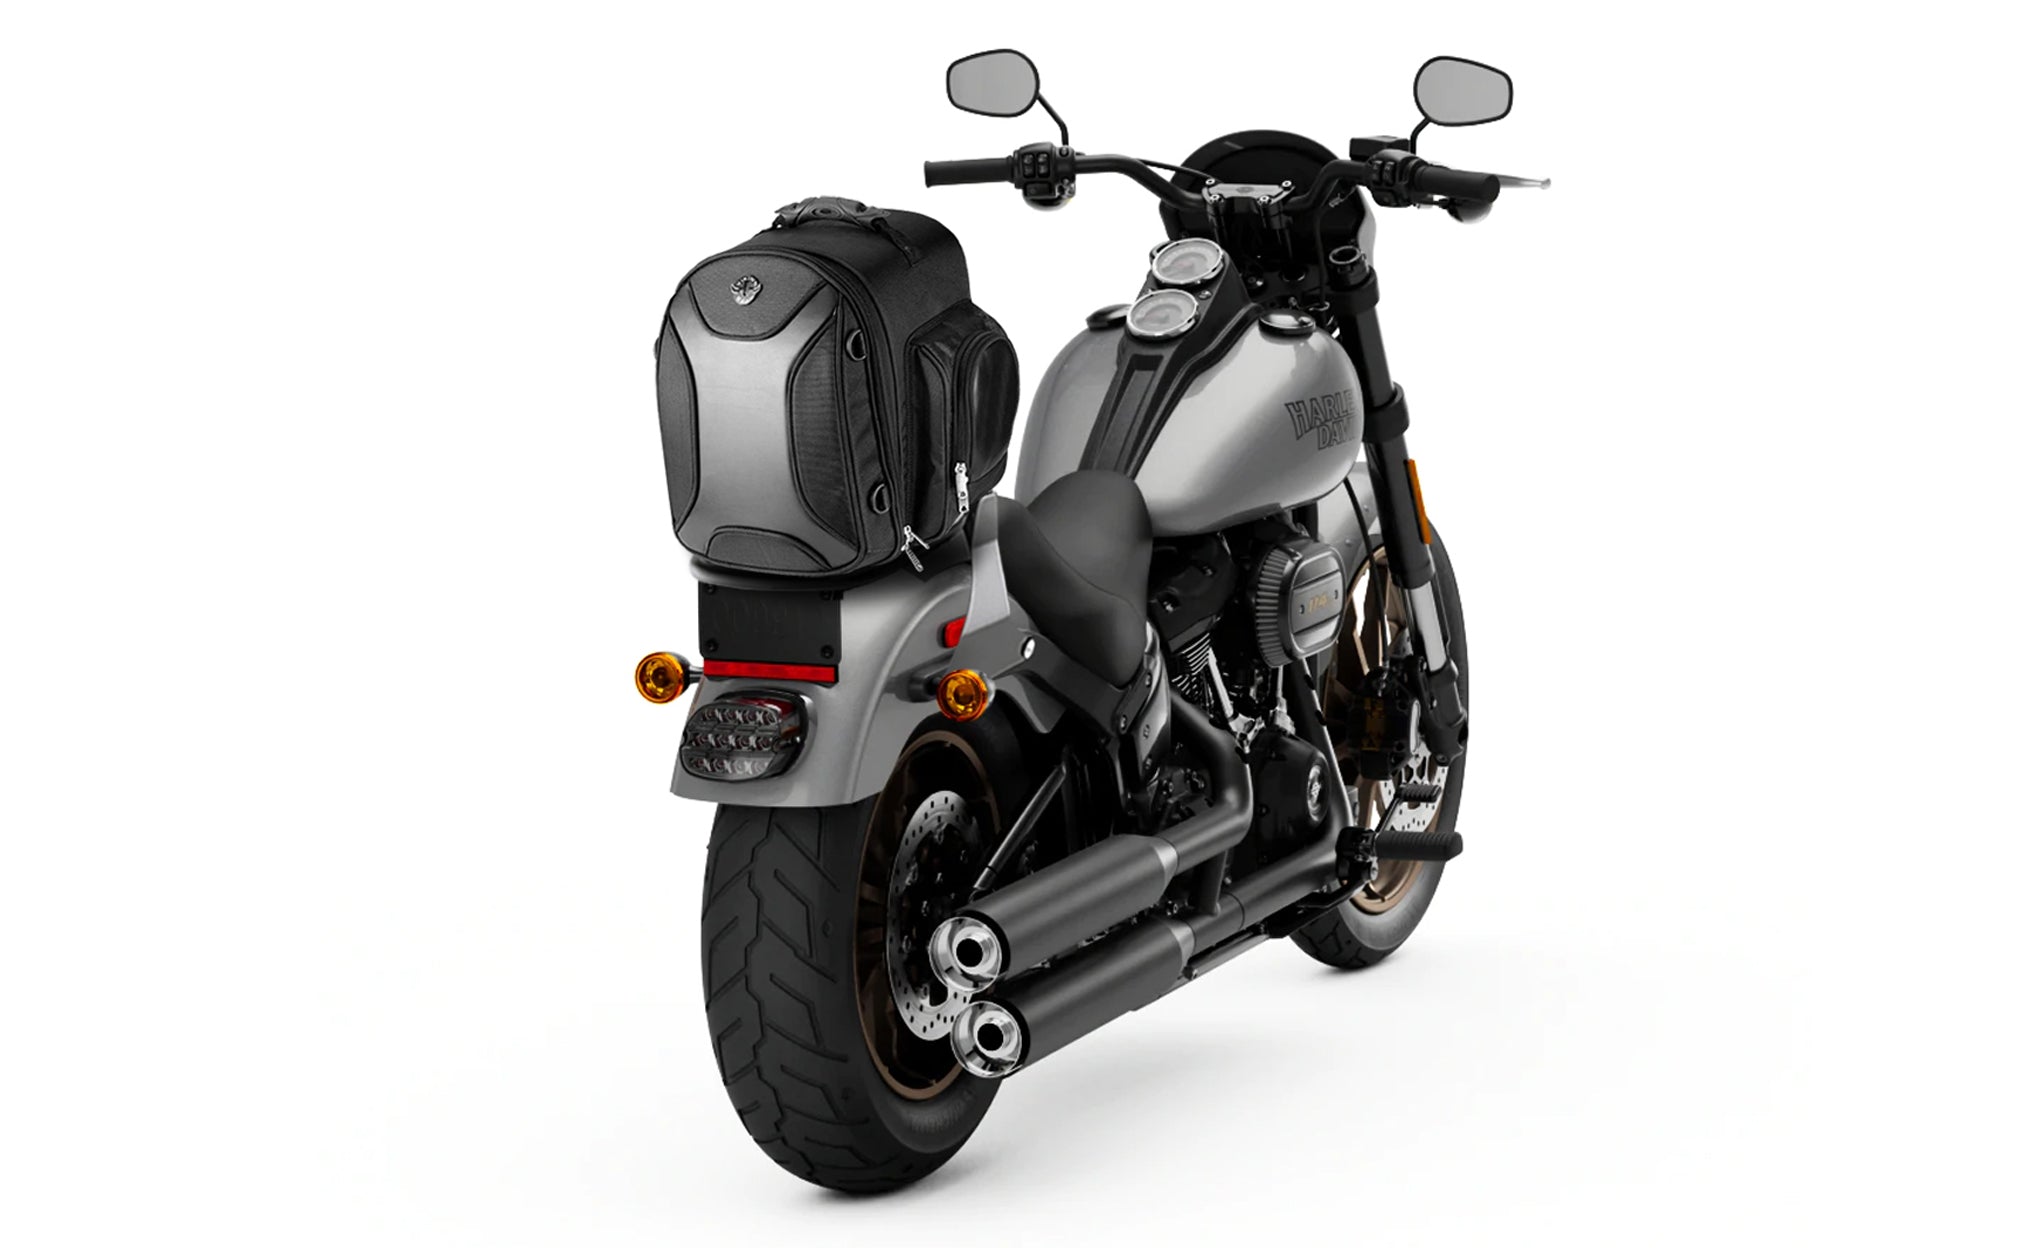 Viking Dagr Small Honda Motorcycle Sissy Bar Bag Bag on Bike View @expand